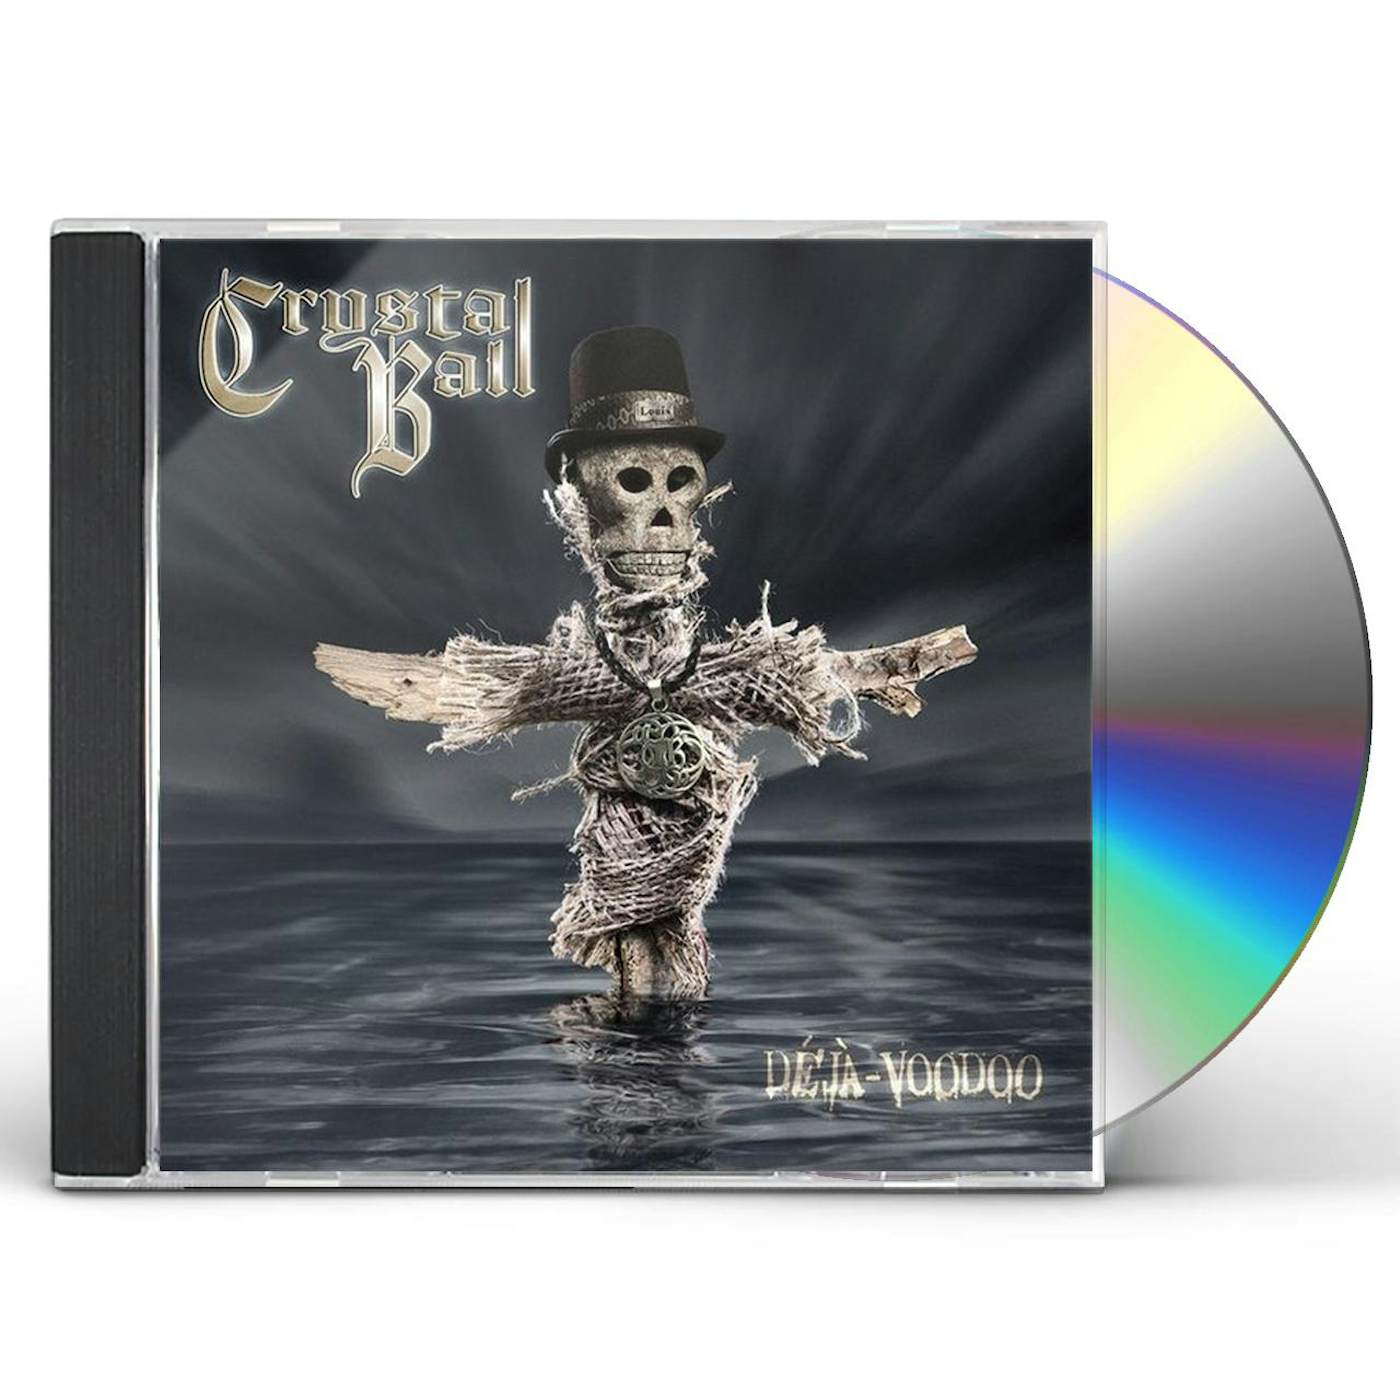 Crystal Ball DEJA VOODOO CD